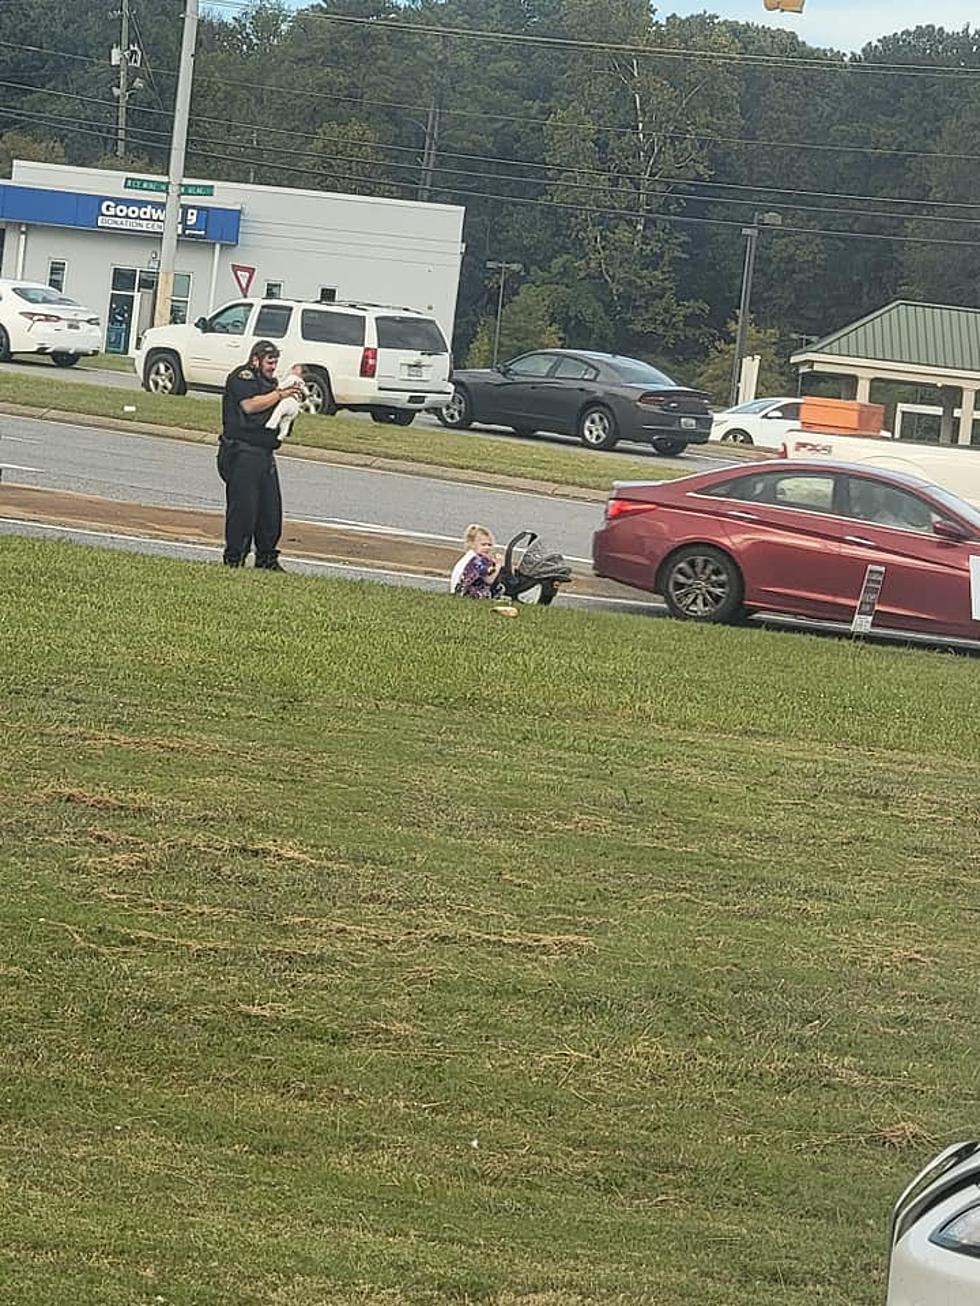 Tuscaloosa Alabama Police Officer Caught On Video